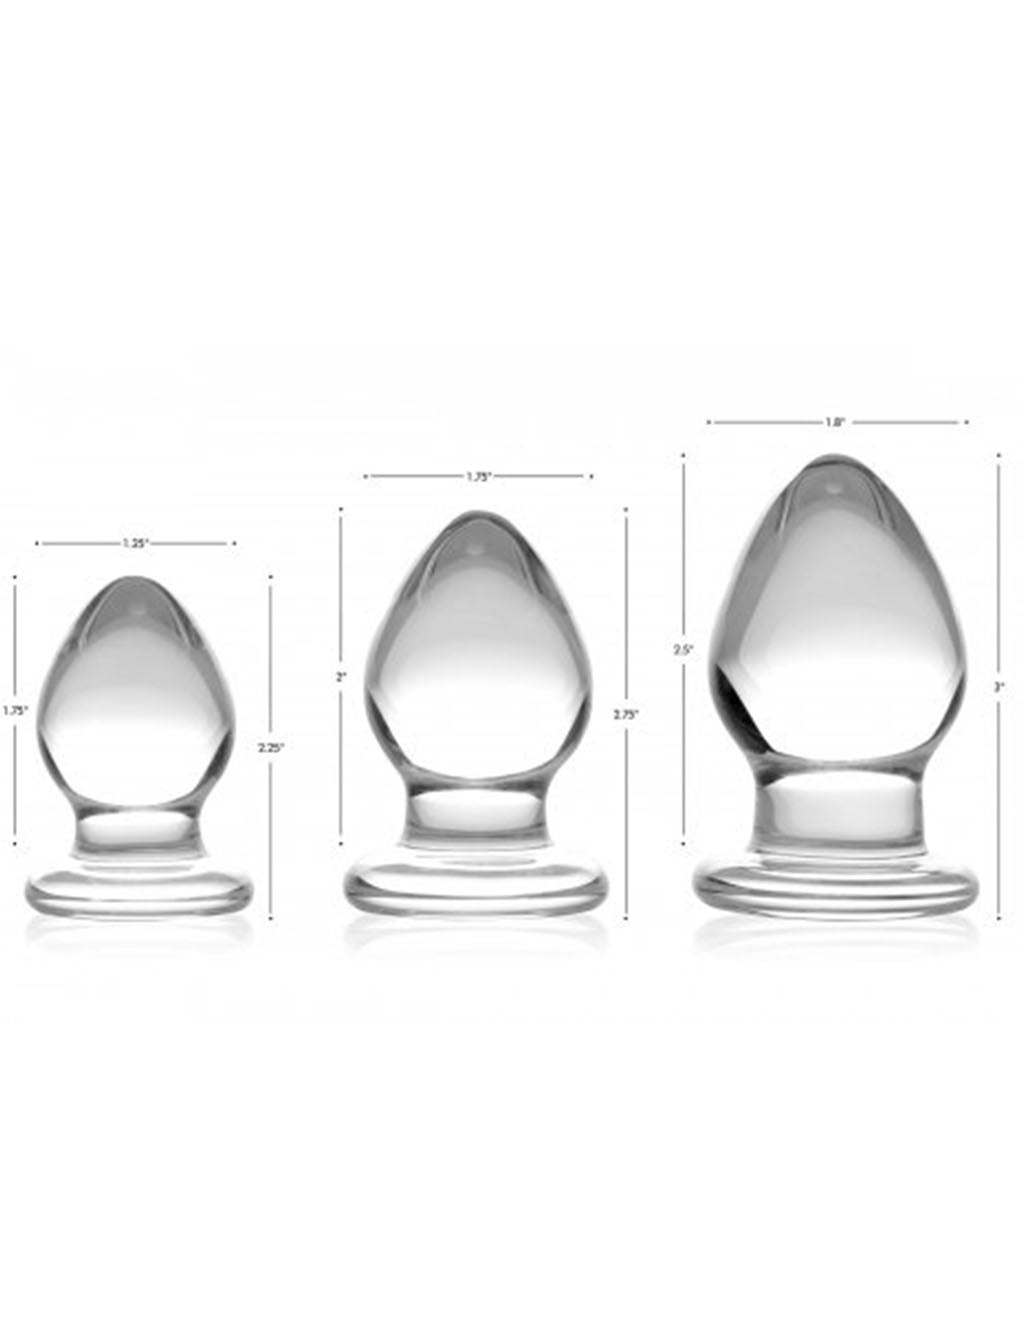 Prisms Erotic Glass Triplets 3 Piece Glass Anal Plug Kit- Dimensions